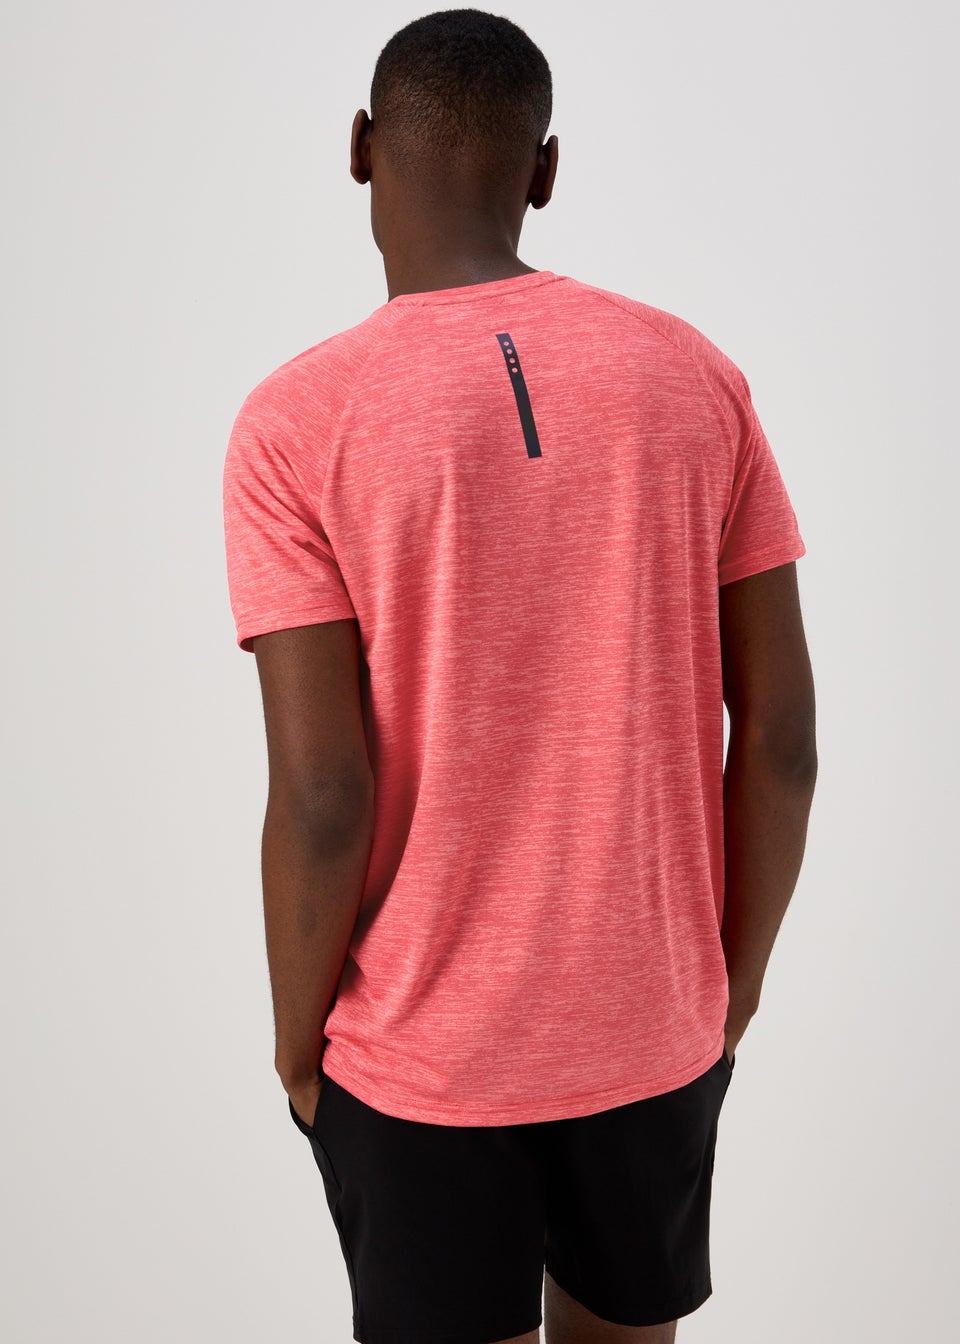 Souluxe Pink Basic Dual Tone T-Shirt